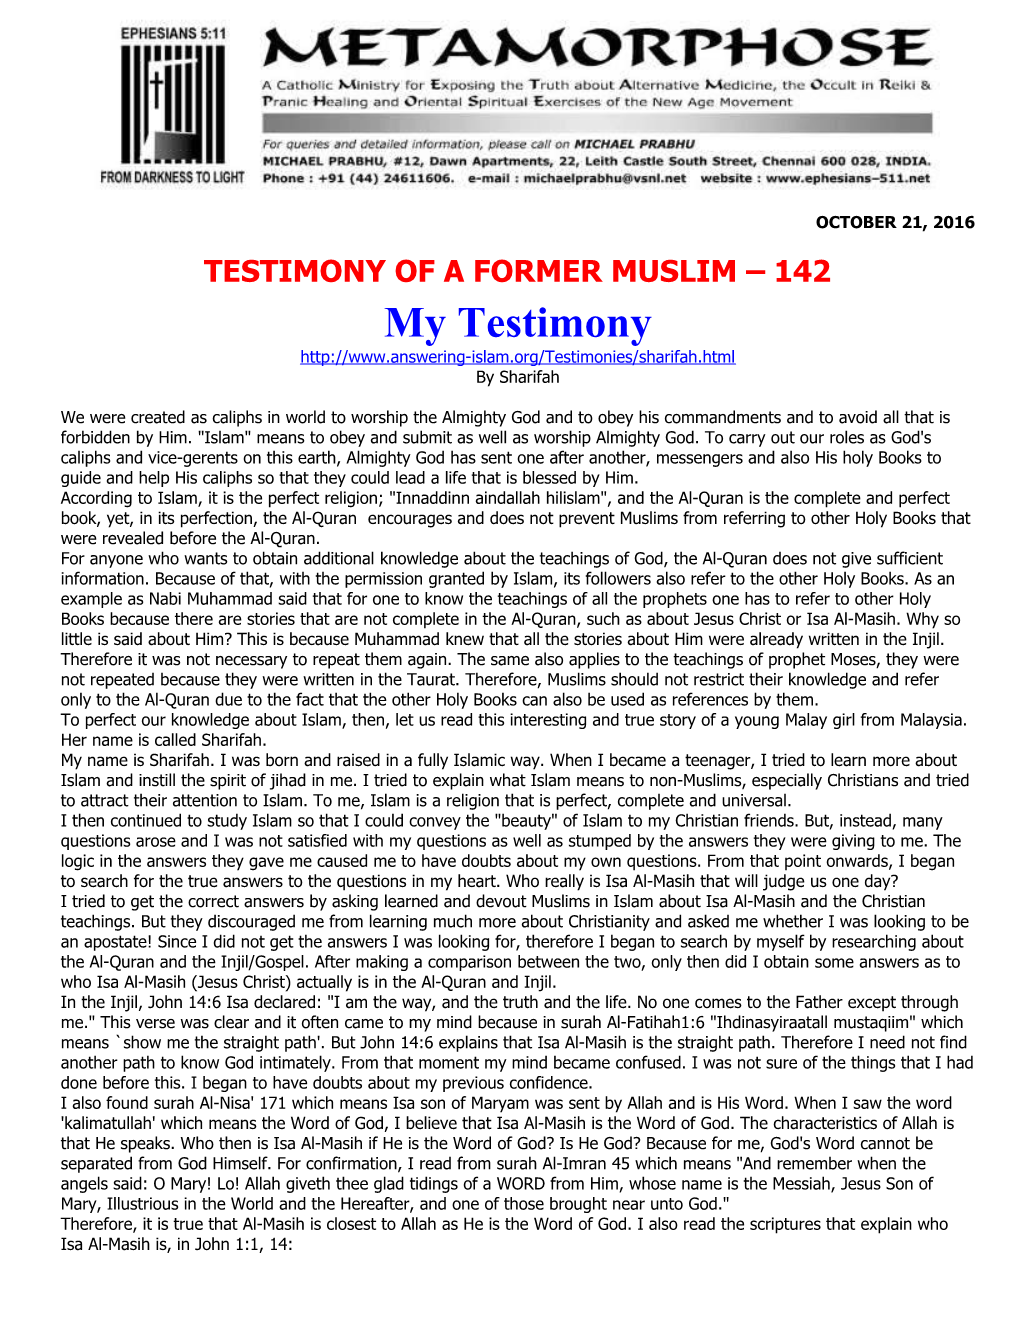 Testimony of a Former Muslim 142